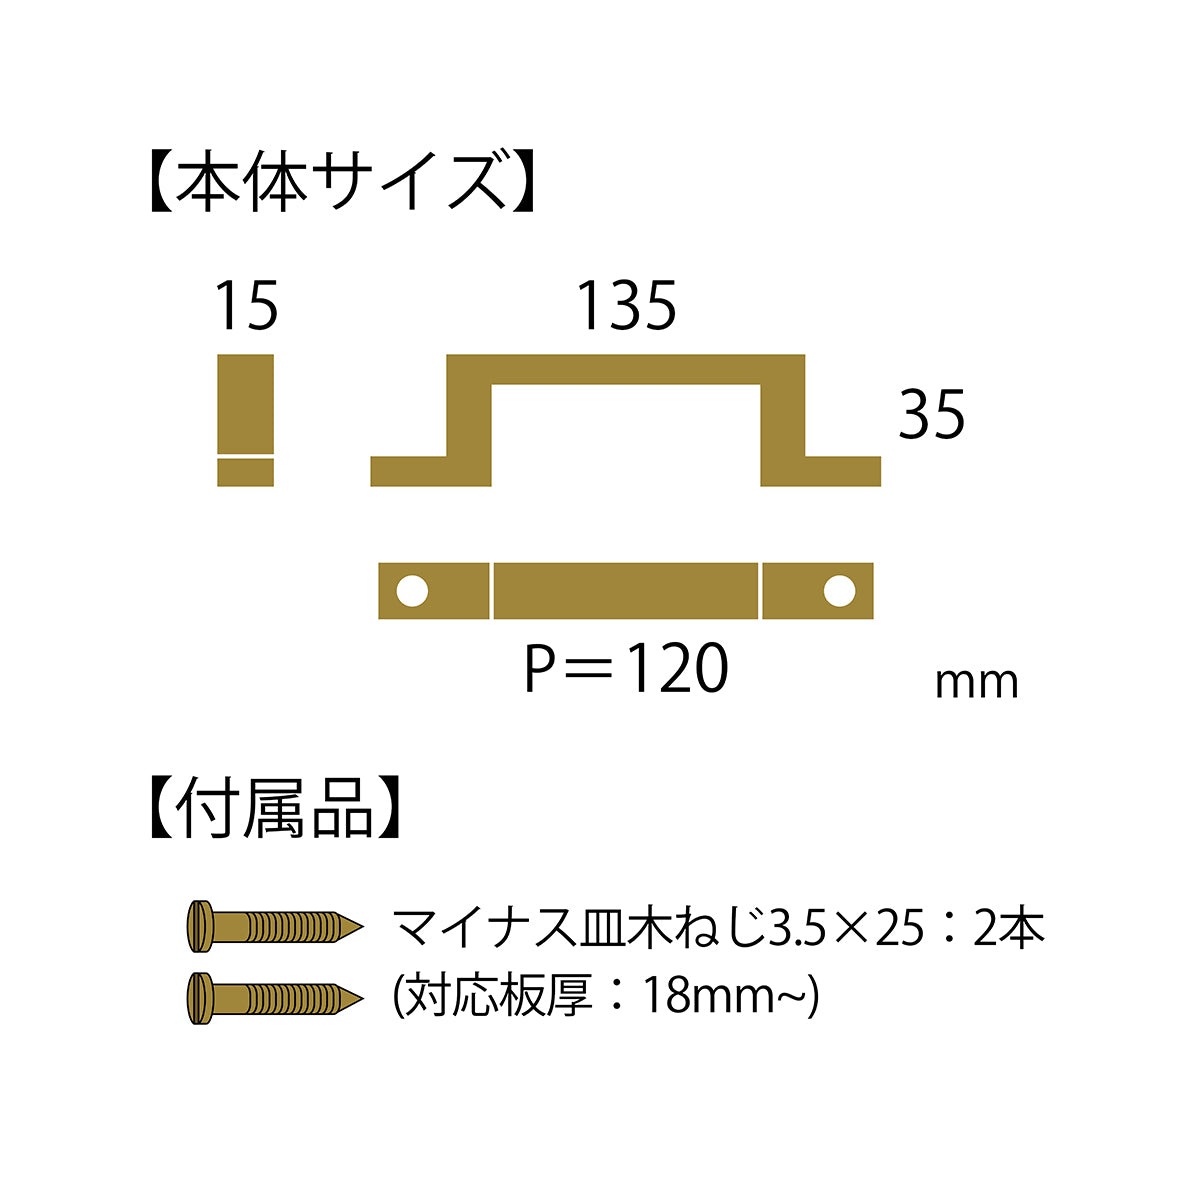 Brass Casting 真鍮鋳物 ハンドル (小型 黒染め HB-202)